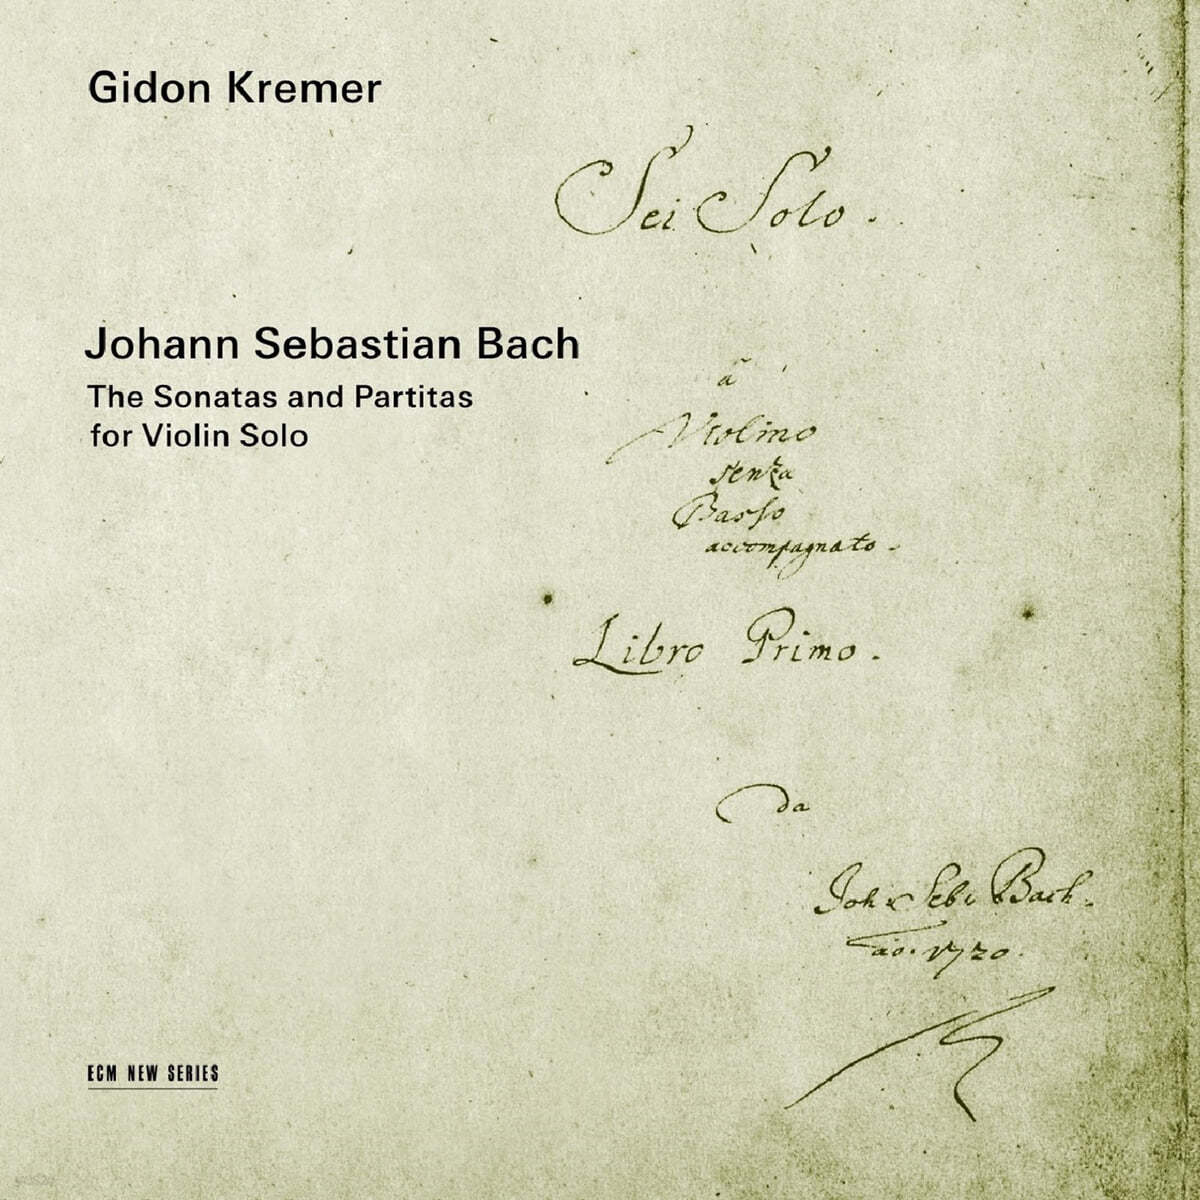 Gidon Kremer 바흐: 무반주 바이올린 소나타와 파르티타 - 기돈 크레머 (Bach: Sonatas and Partitas for Solo Violin, BWV1001-1006)